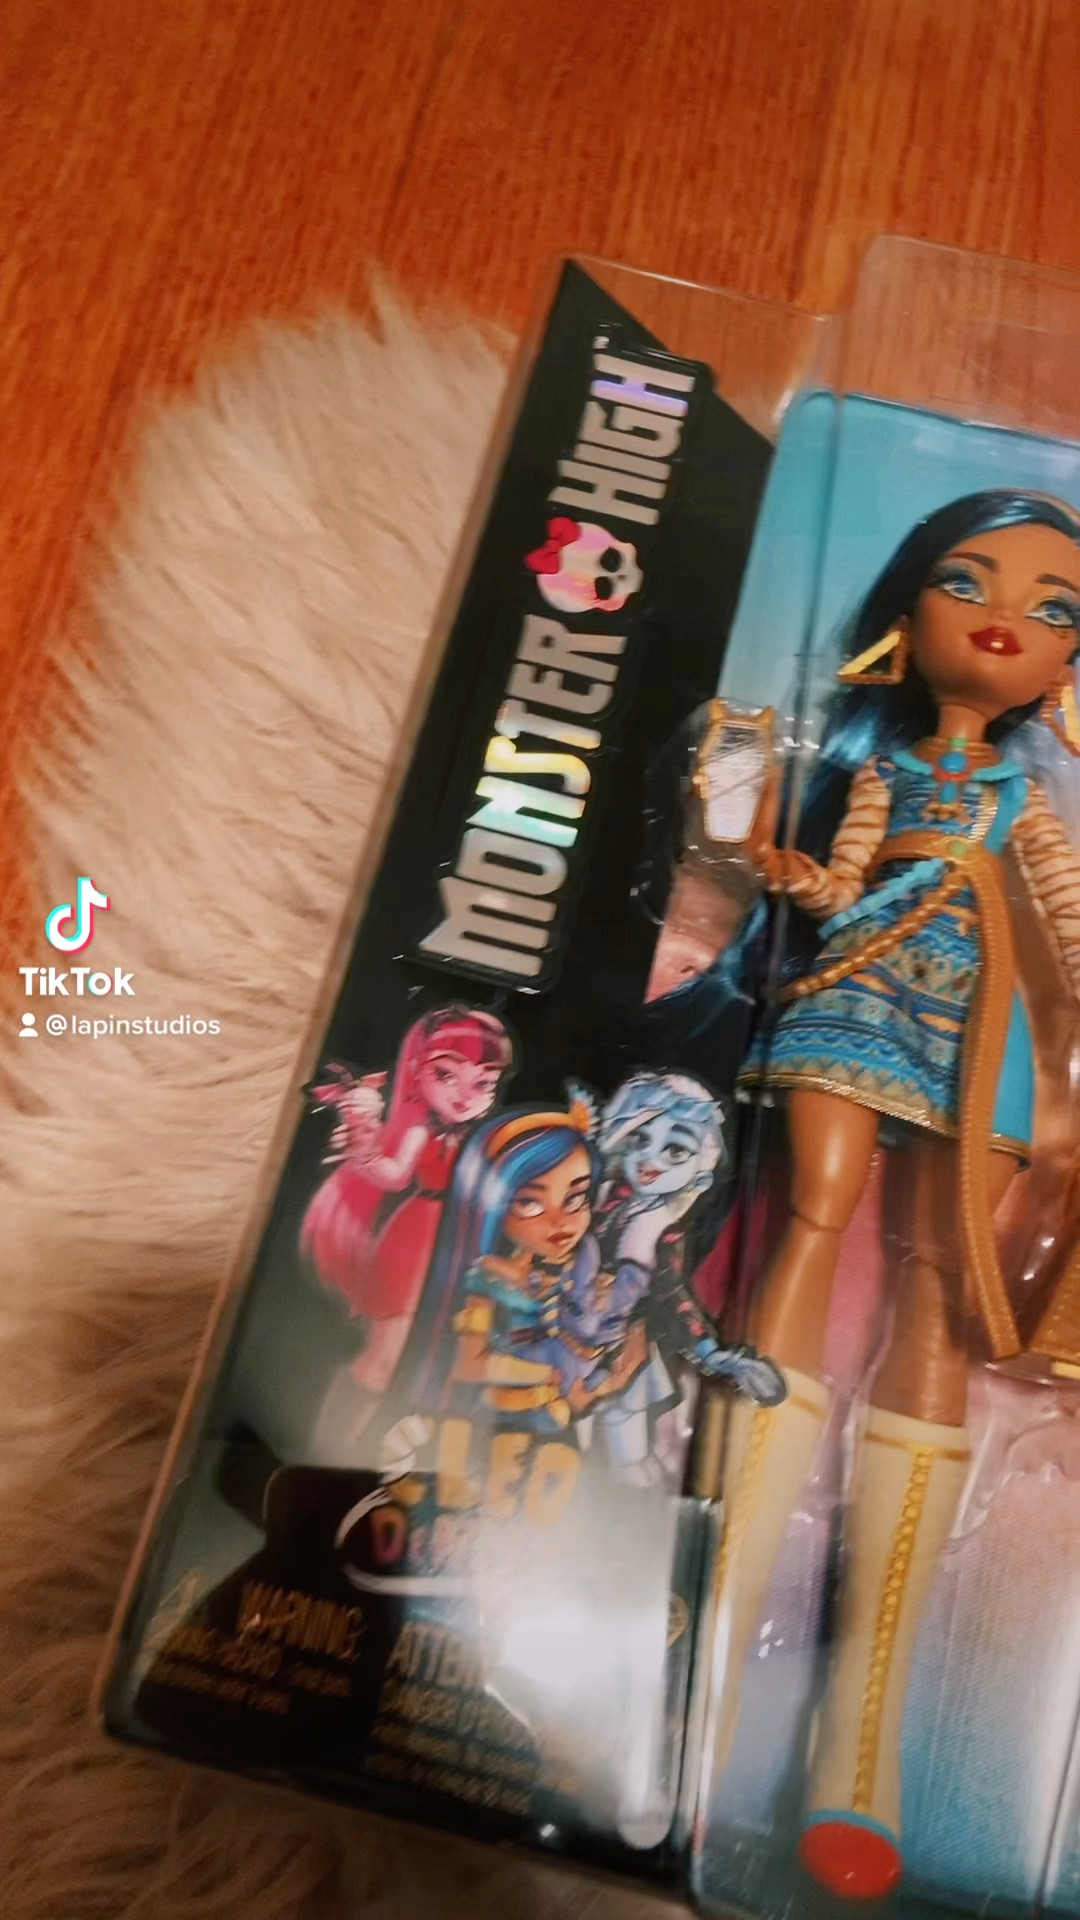 Monster High Cleo De Nile G3 Reboot Doll, Generation 3 Monster High